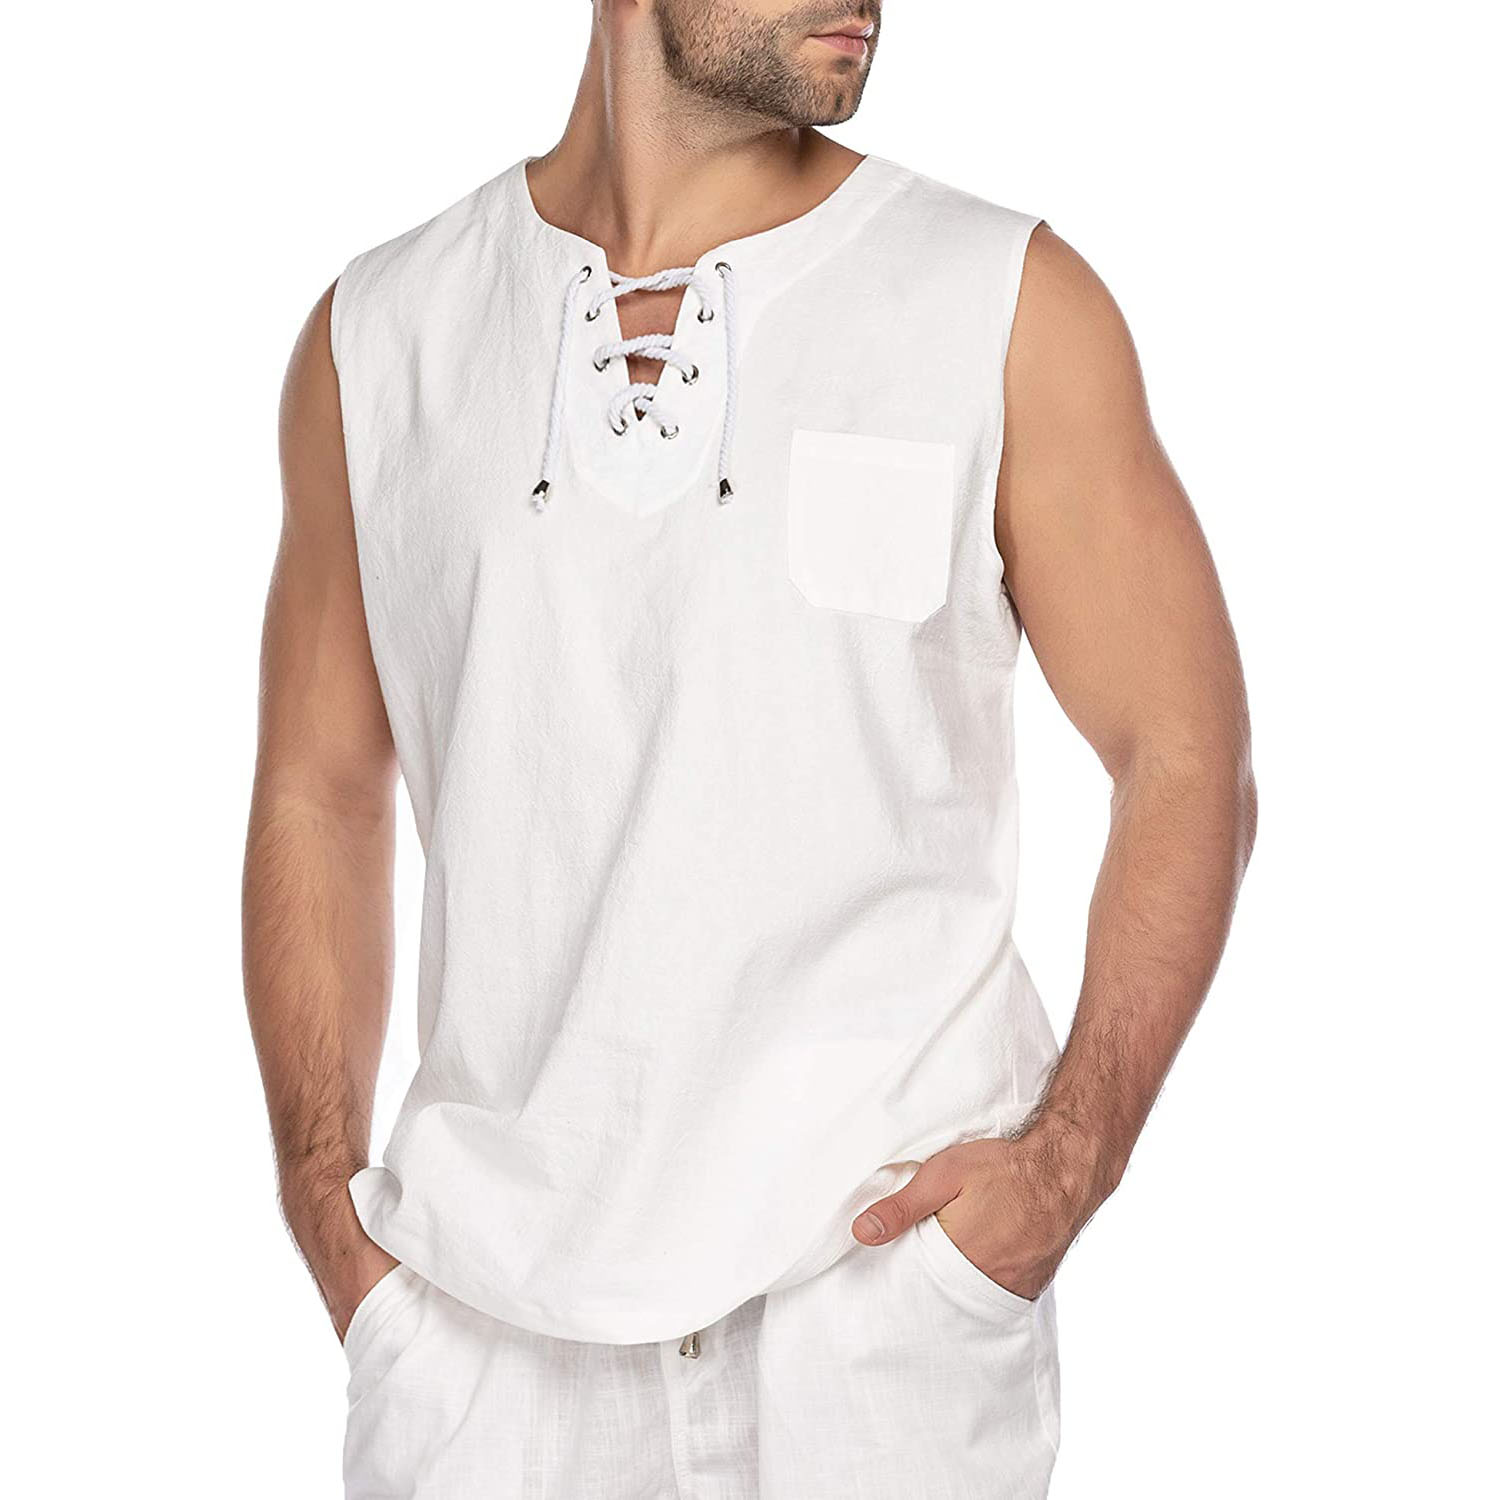 Men's Sleeveless Cotton Linen Chic Vest T-shirt